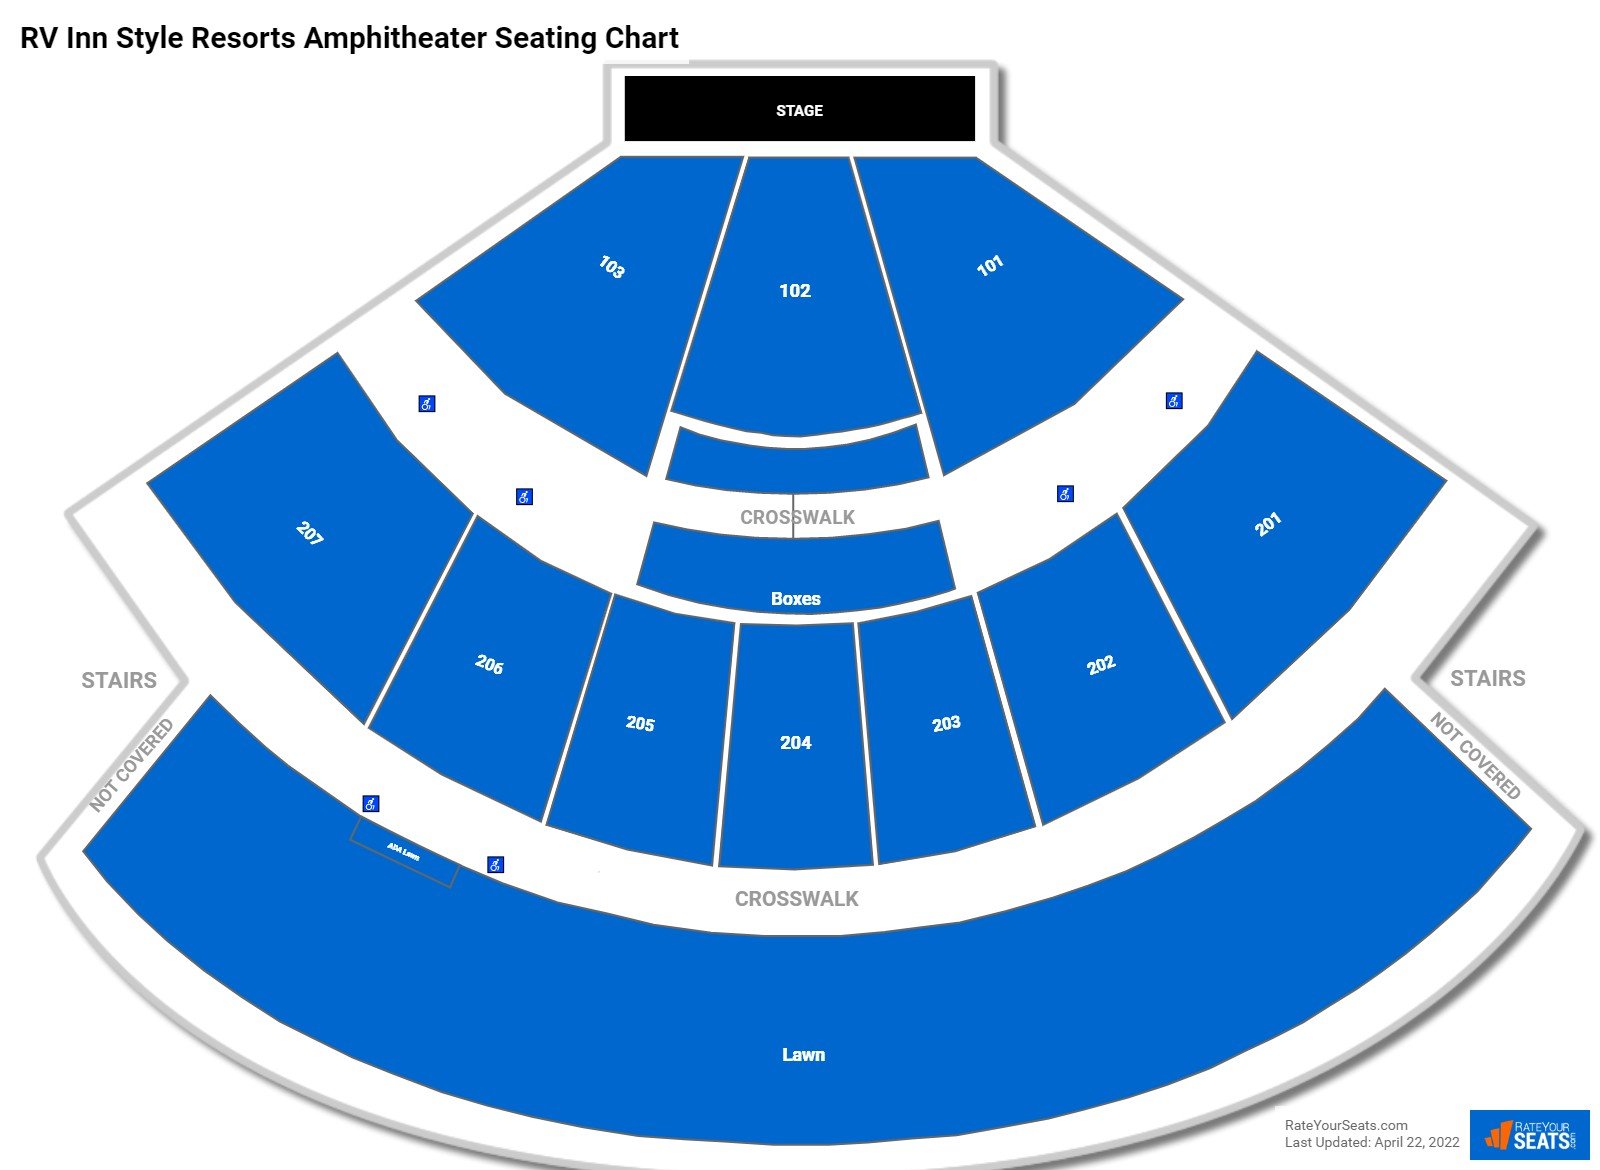 RV Inn Style Resorts Amphitheater Concert Seating Chart